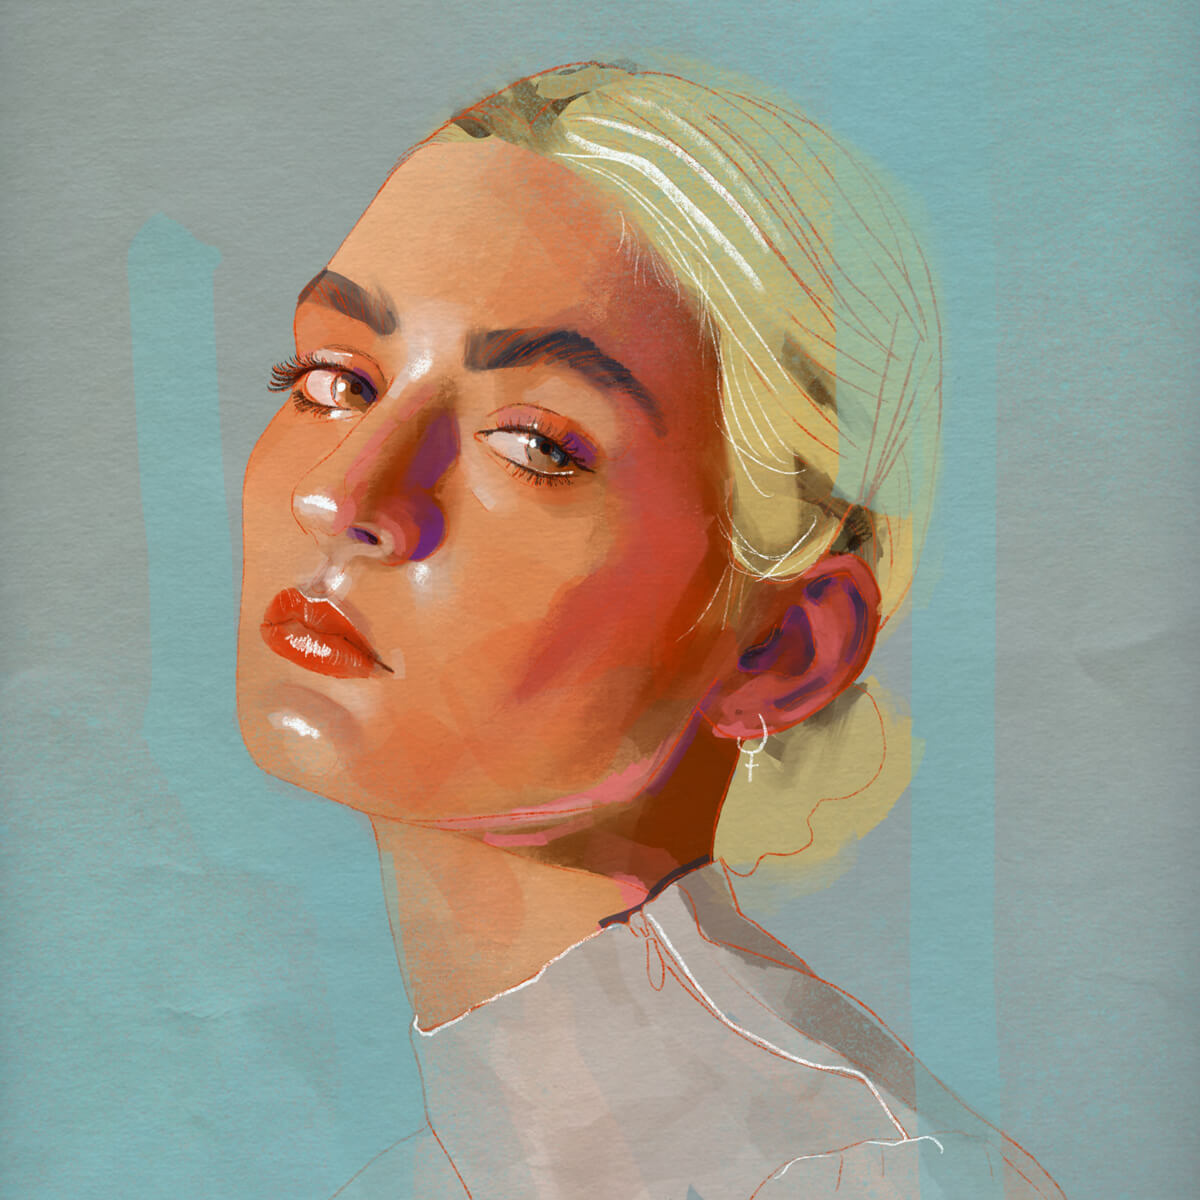 Digital Portrait: Painterly Style Character Portrayal